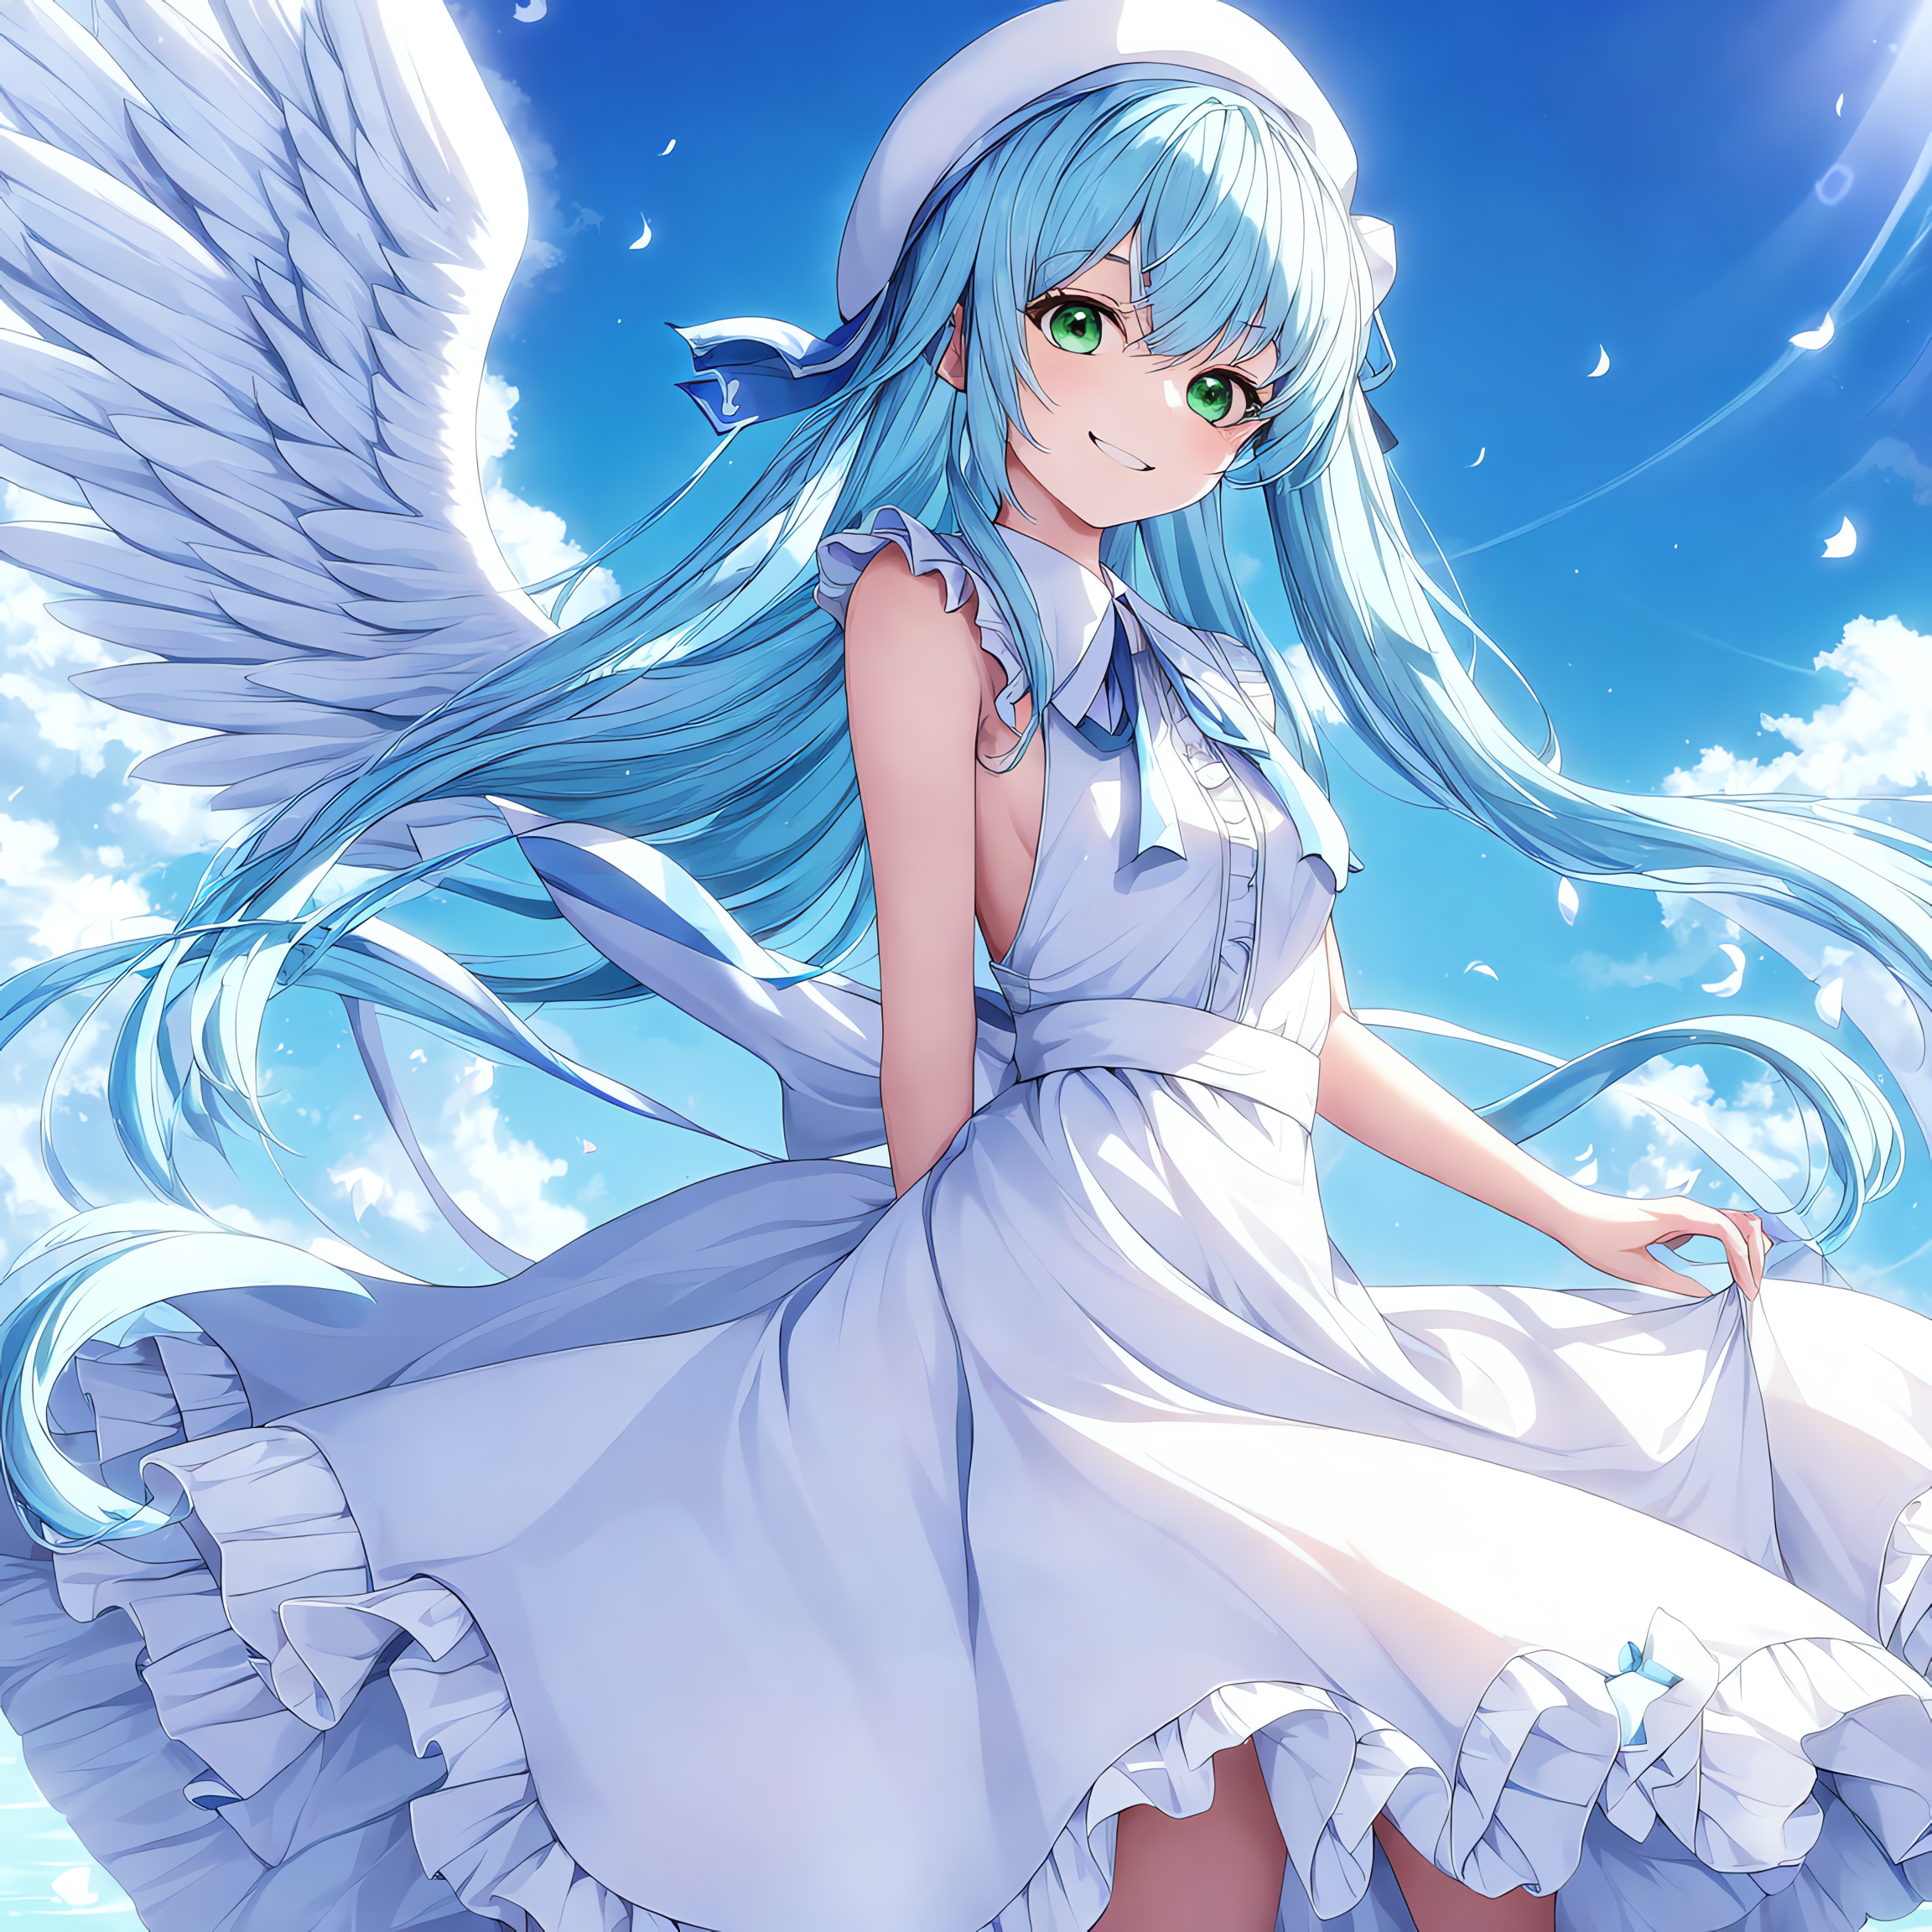 Anime 2304x2304 anime anime girls original characters artwork digital art AI art portrait display wings smiling clouds petals long hair lifting dress dress